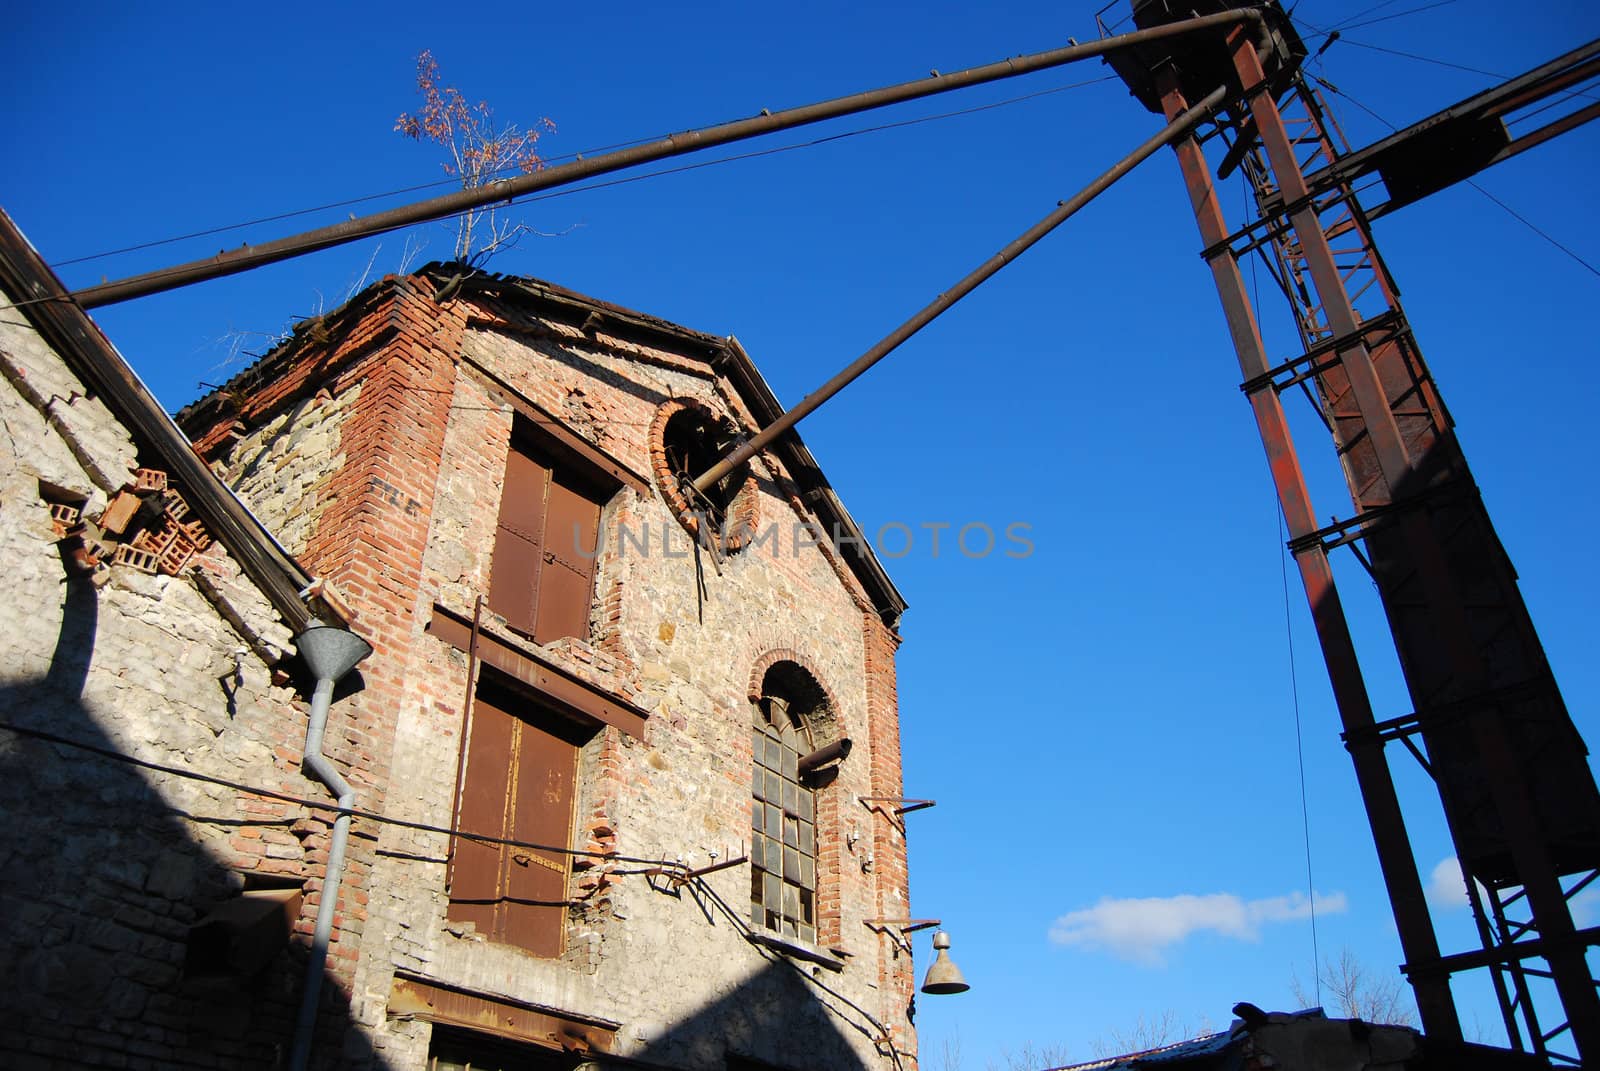 Old ruined factory from below by varbenov